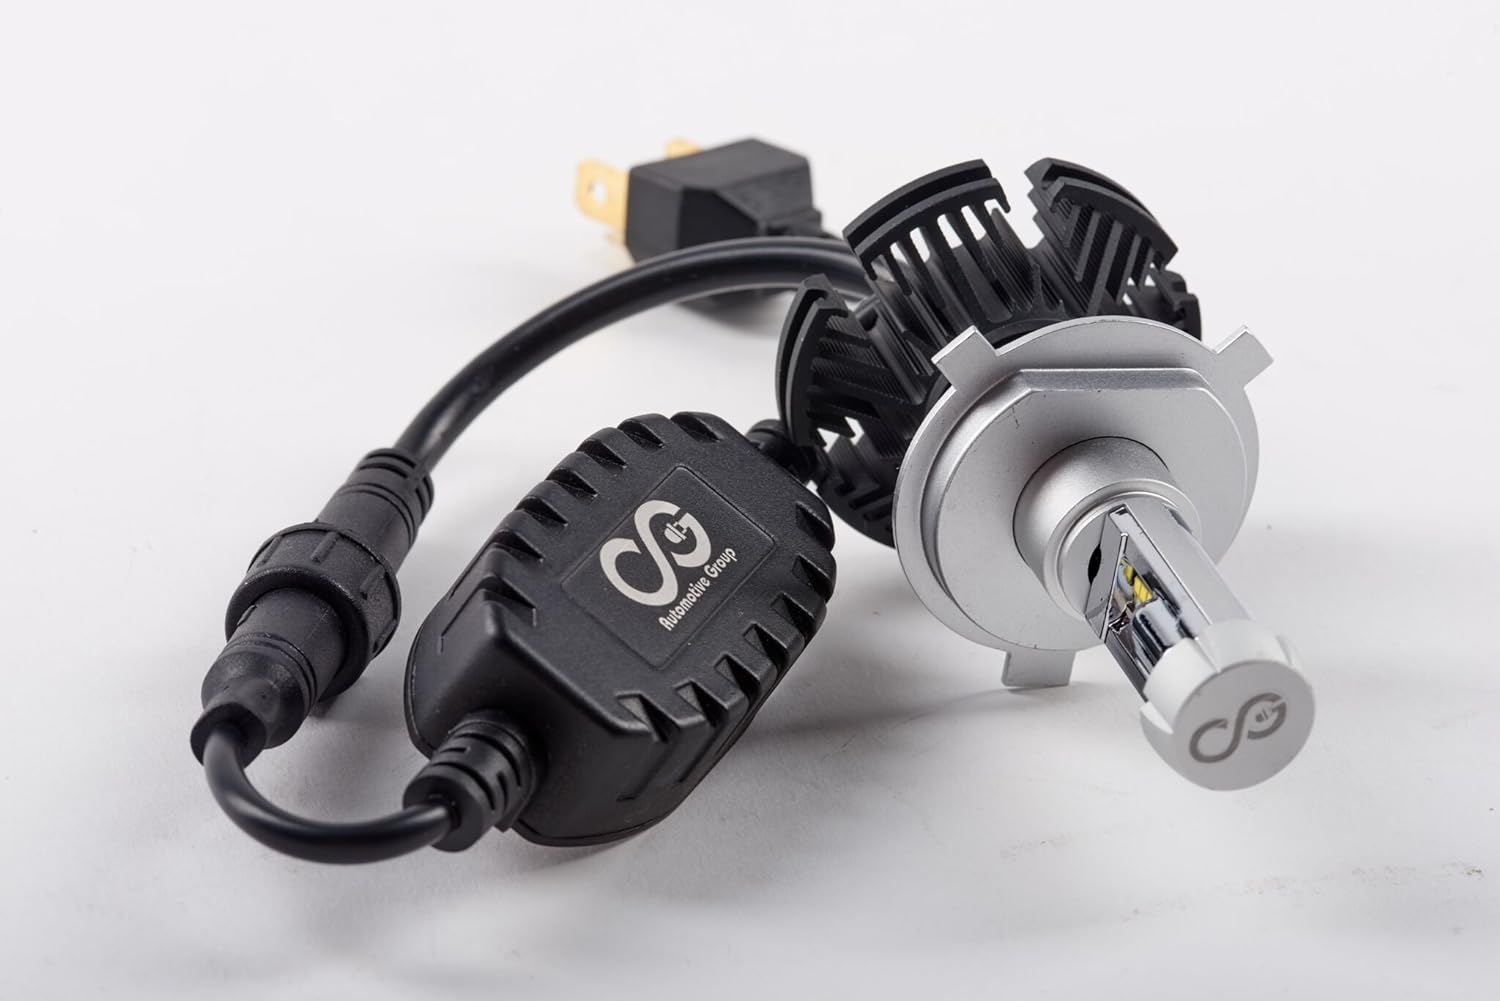 CG Automotive Workhorse 9005 LED Car Headlight Kit- Premium Long-Lasting Headlights w/CG Error-Free DashTech | CANBUS+DRL | Improved Road Visibility & Safety | Exceptional Brightness | 2 Yr Warranty